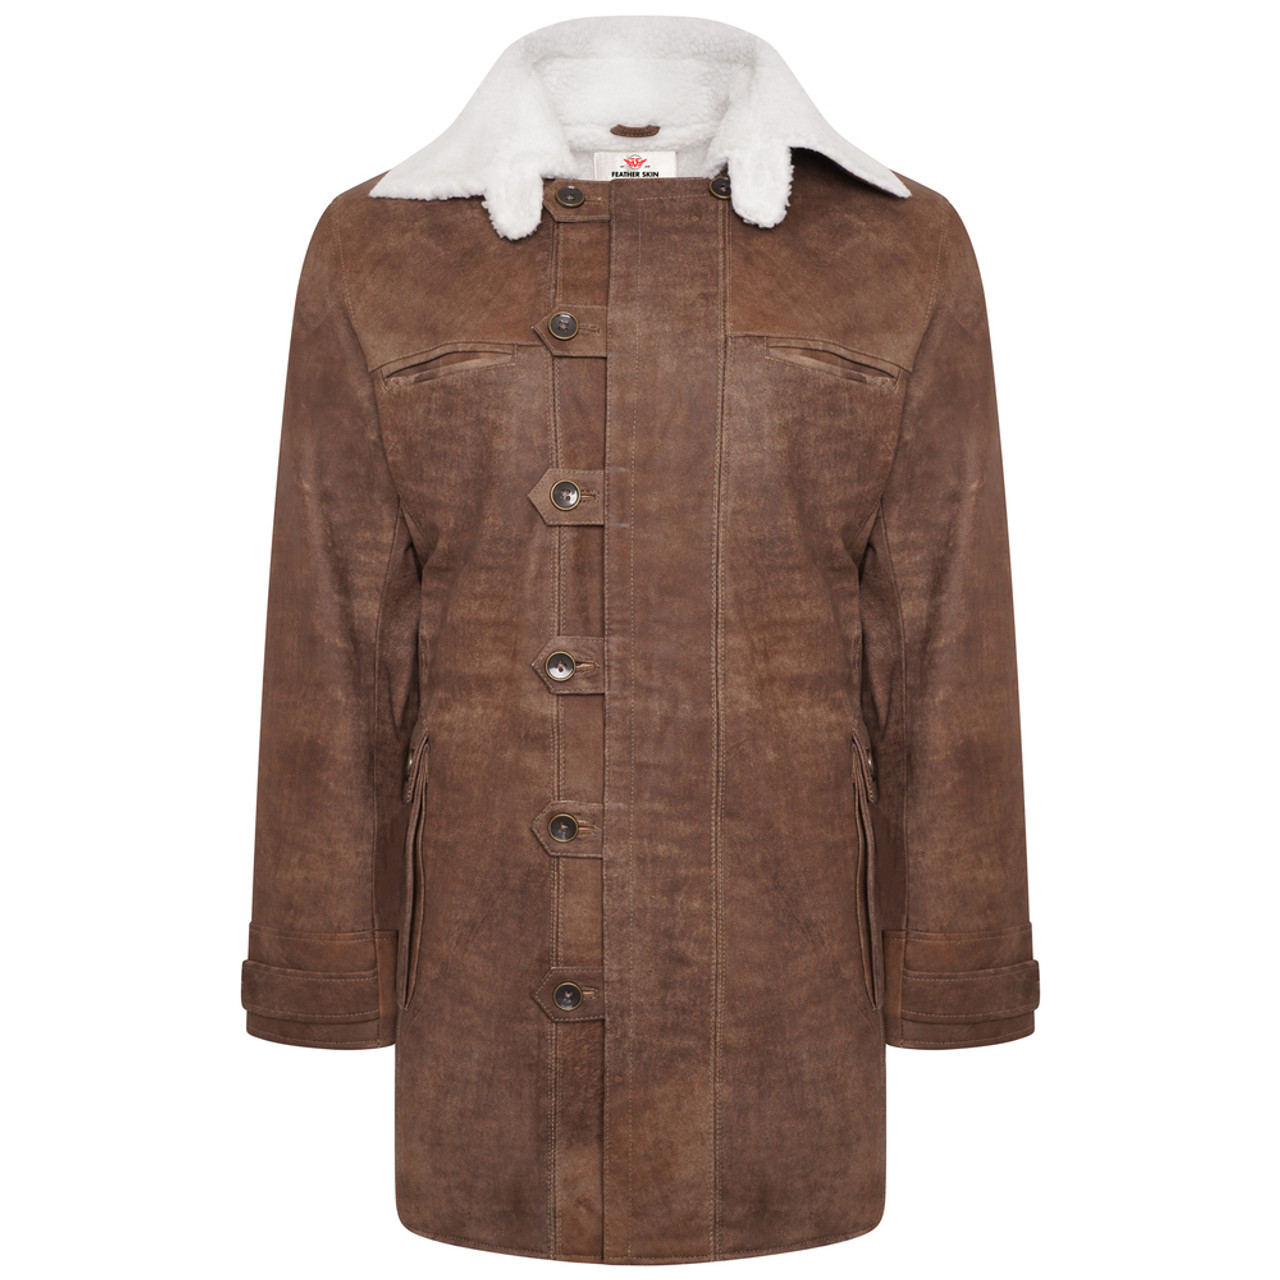 BANE Coat Original Distressed Brown Color | Feather Skin